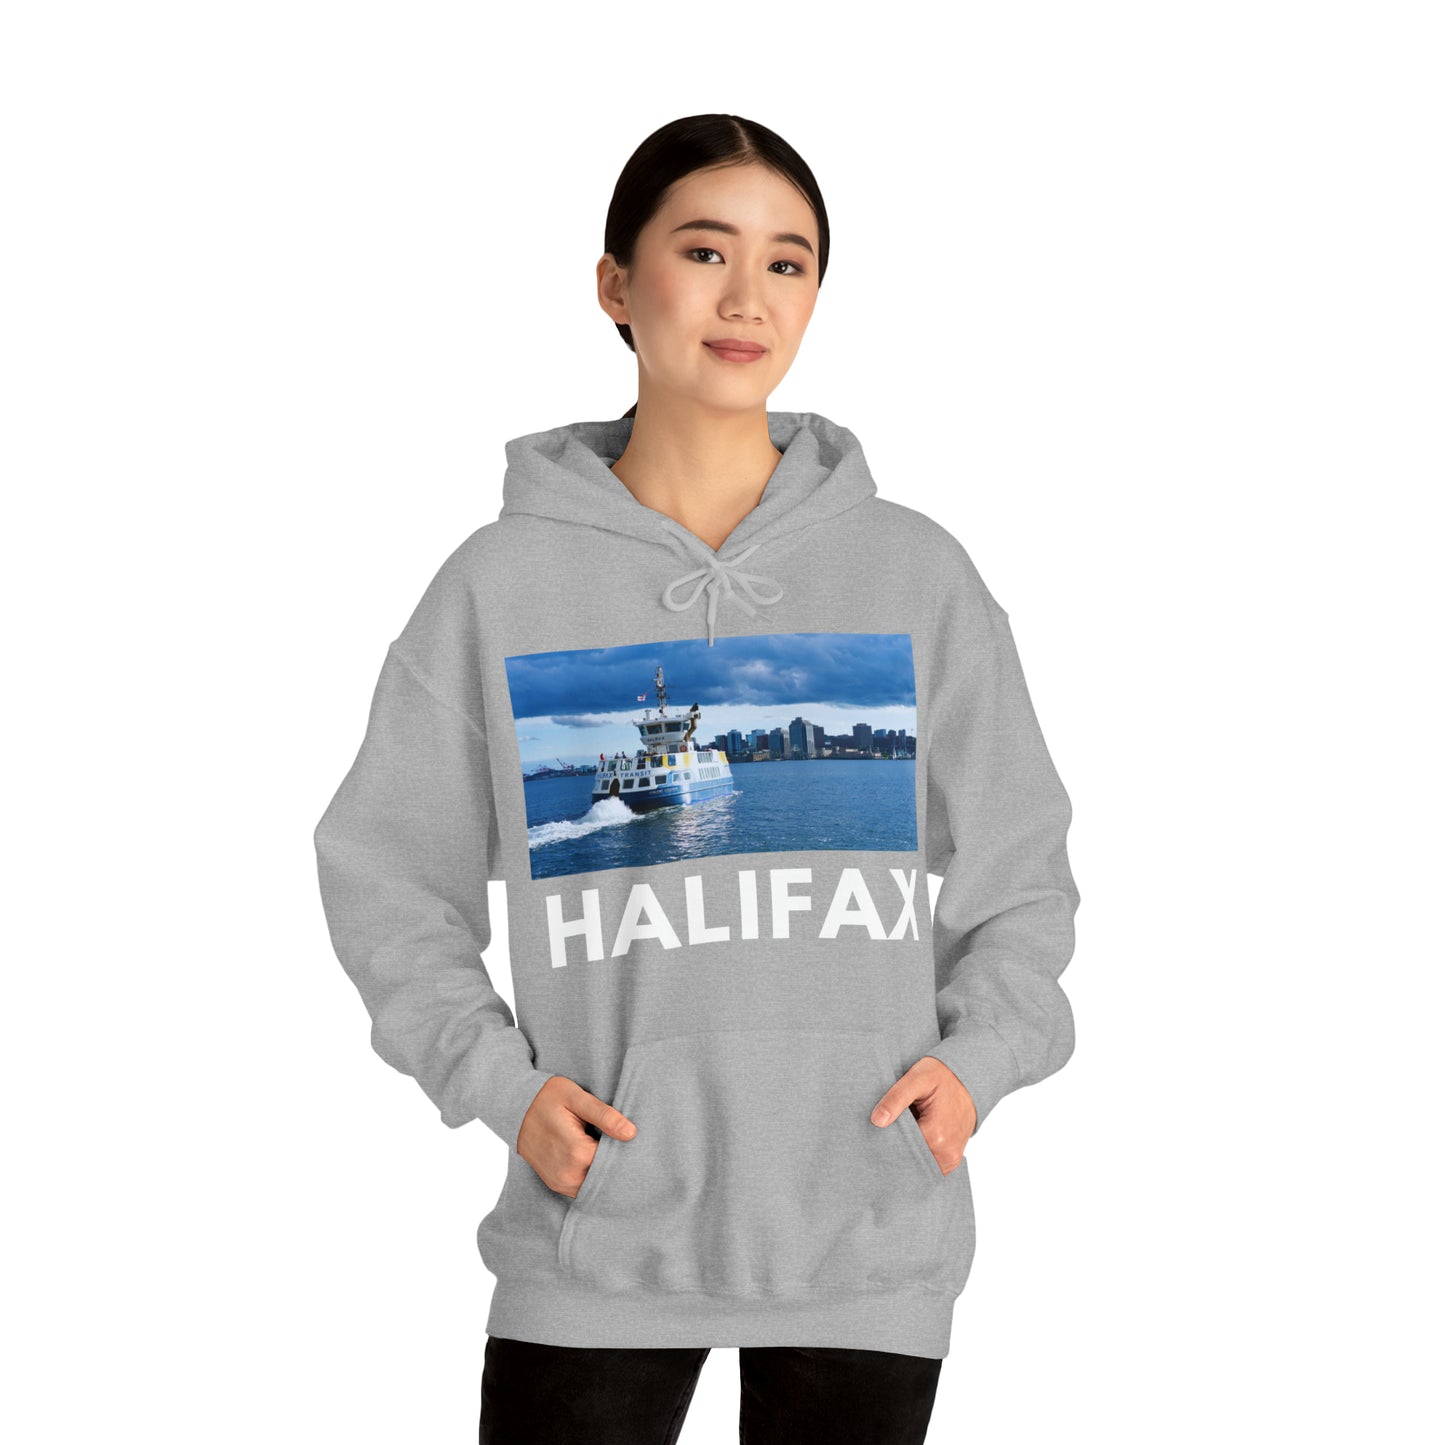   Halifax Hoodie: The Ferry from HoodySZN.com